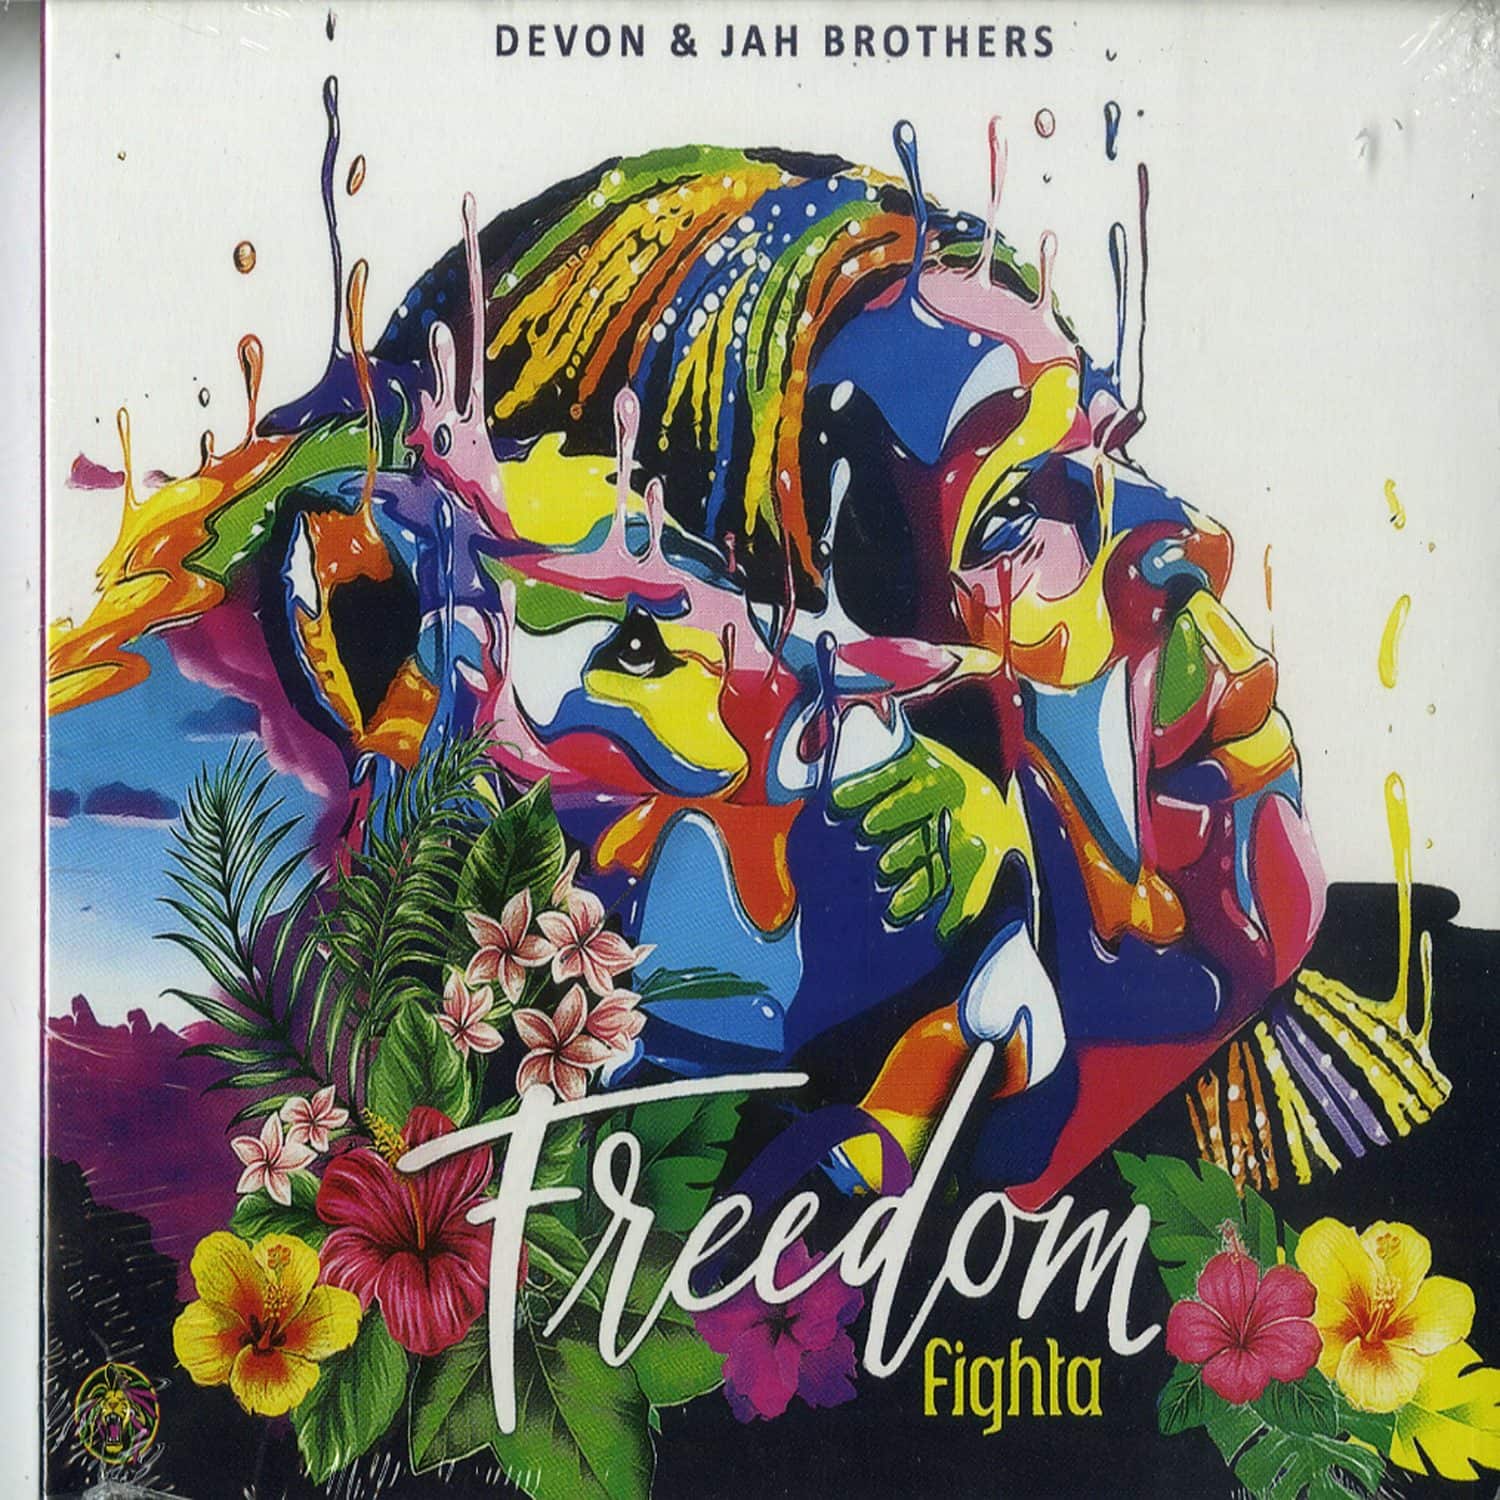 Devon & Jah Brothers - FREEDOM FIGHTA 